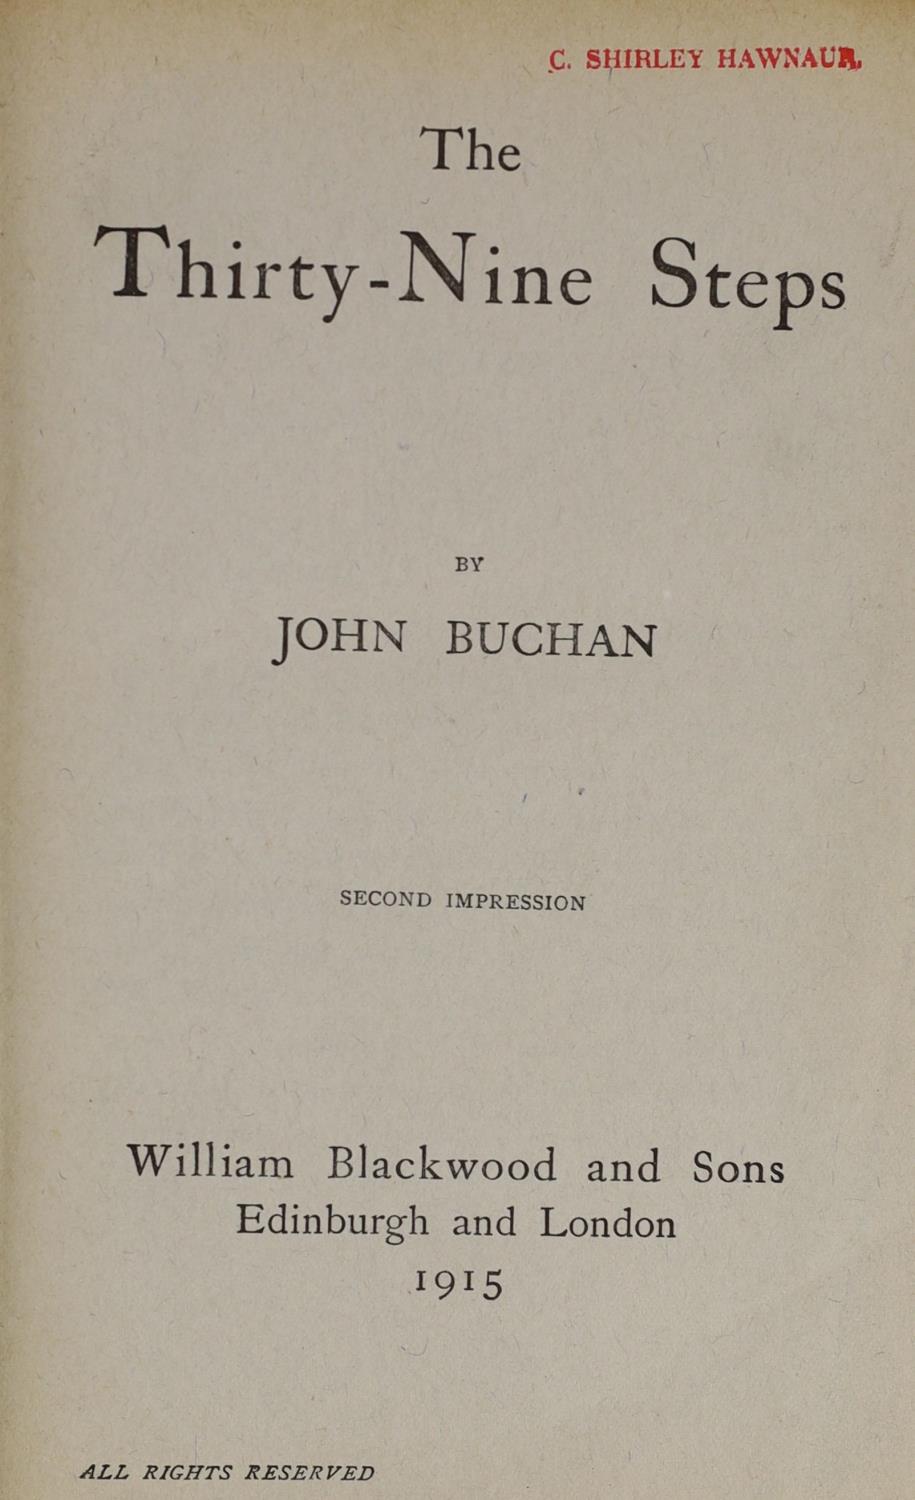 ° ° Buchan, John, 1st Baron Tweedsmuir - 2 works - The Thirty Nine Steps, 1st edition in book - Image 2 of 5